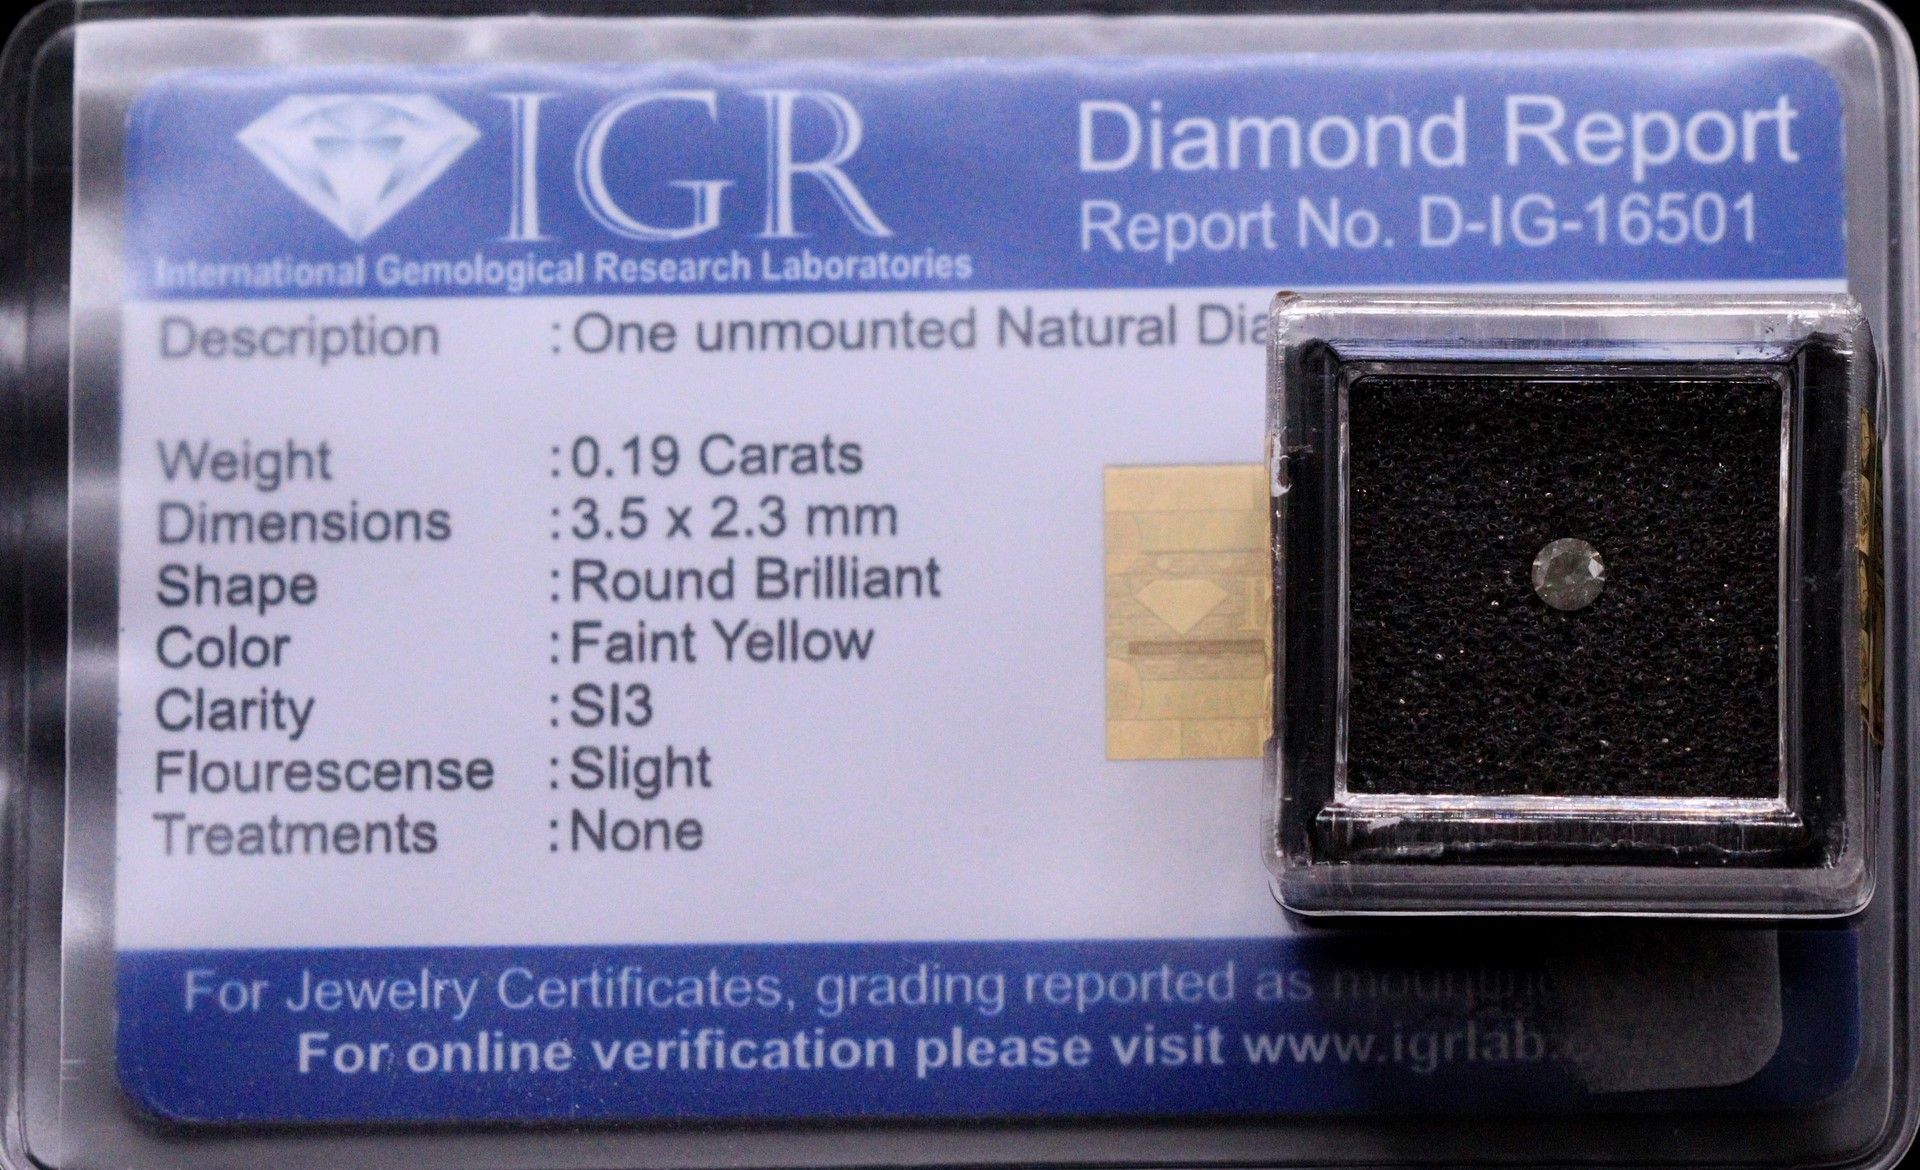 Null 印章下的圆形淡黄色钻石。 
随附一份IGR证书，证明: 
颜色：淡黄色
清晰度 : SI3
荧光 : 微弱
重量 : 0.19 ct. 

尺寸 : &hellip;